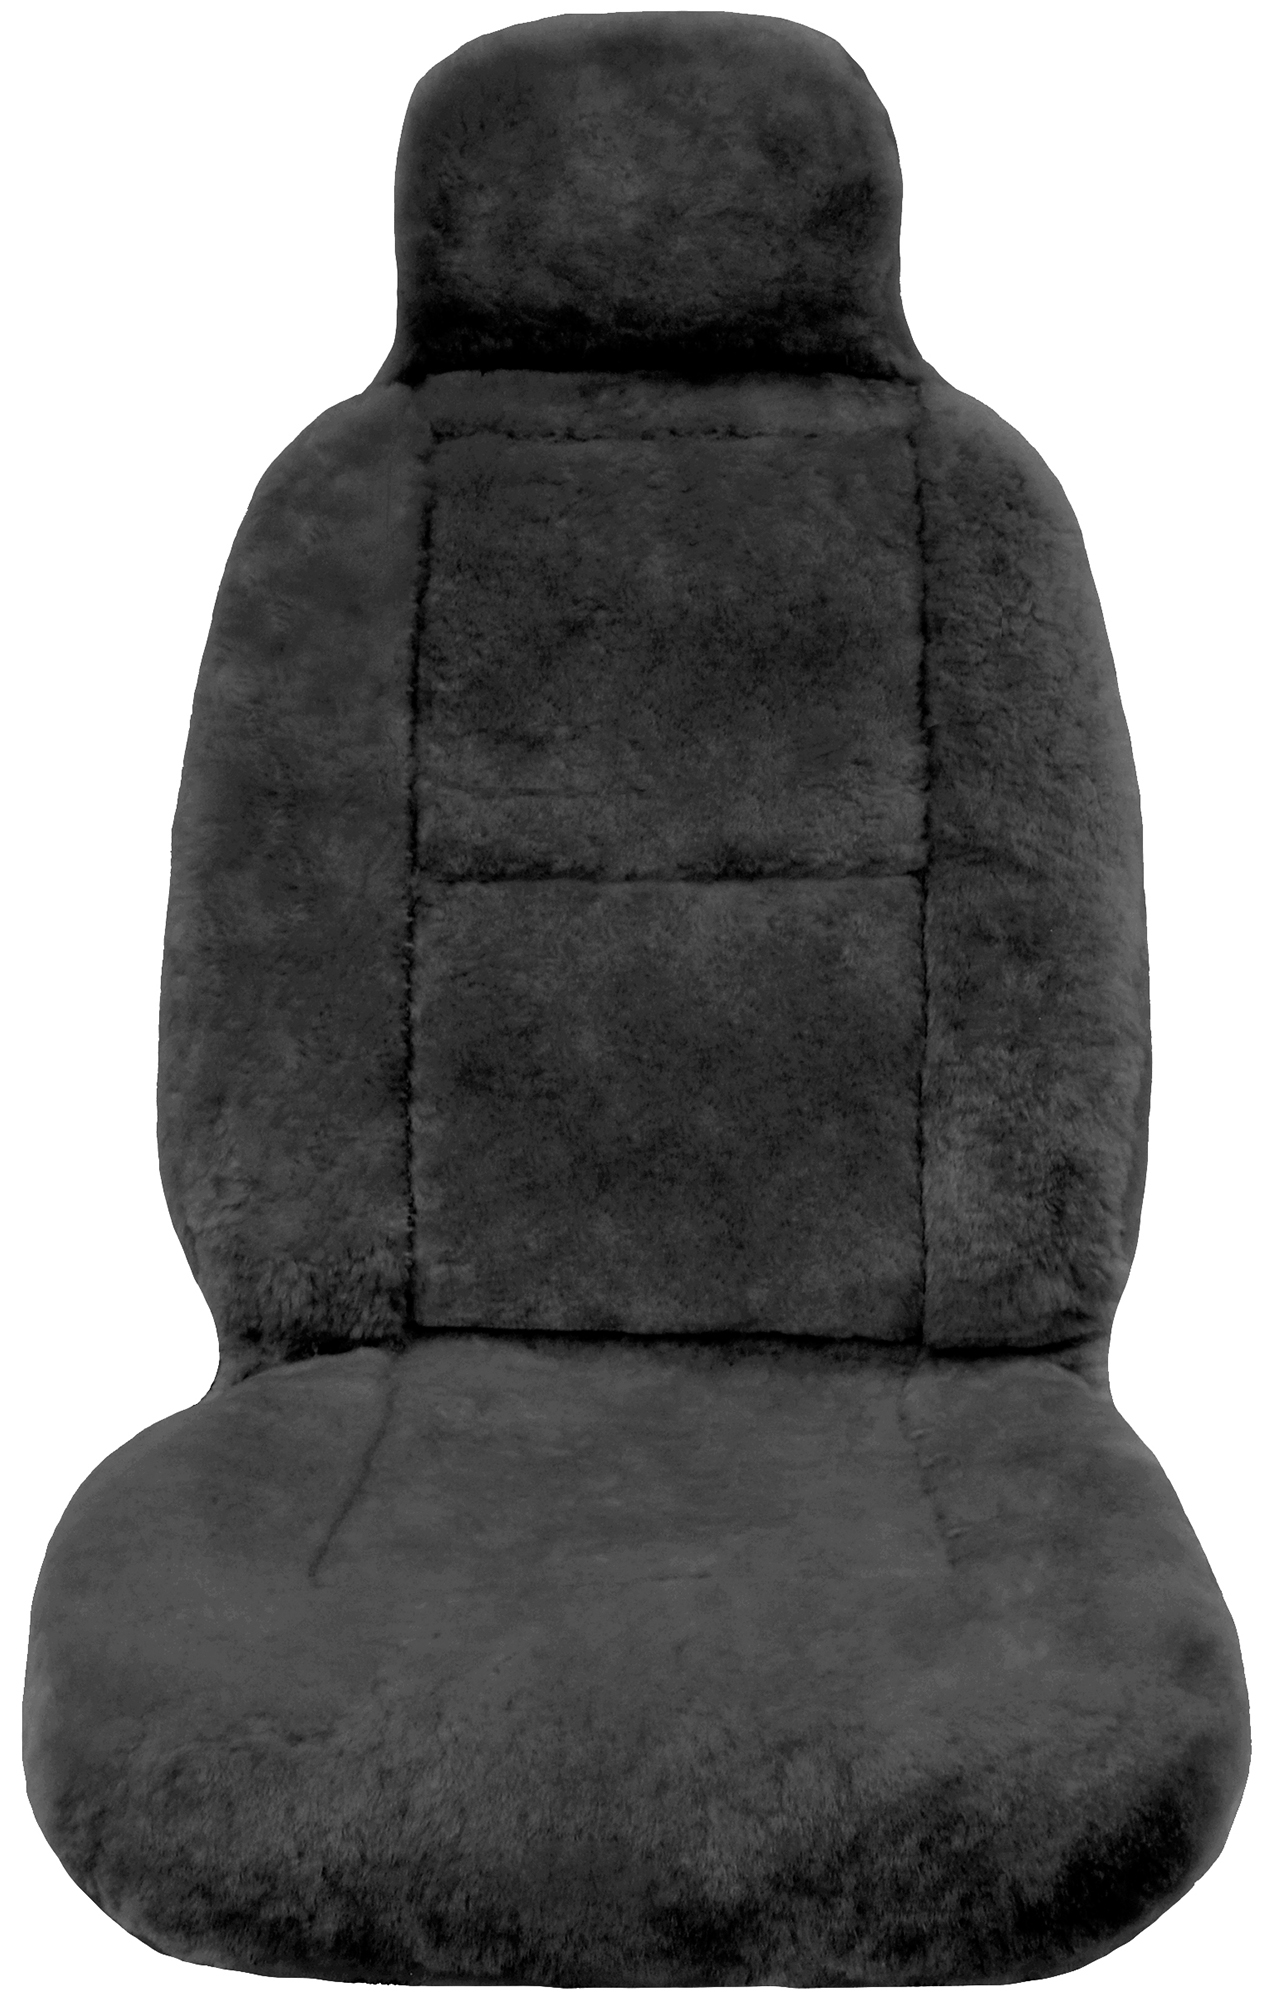 Eurow Sheepskin Seat Cover New XL Design Premium Pelt - Gray - image 2 of 6